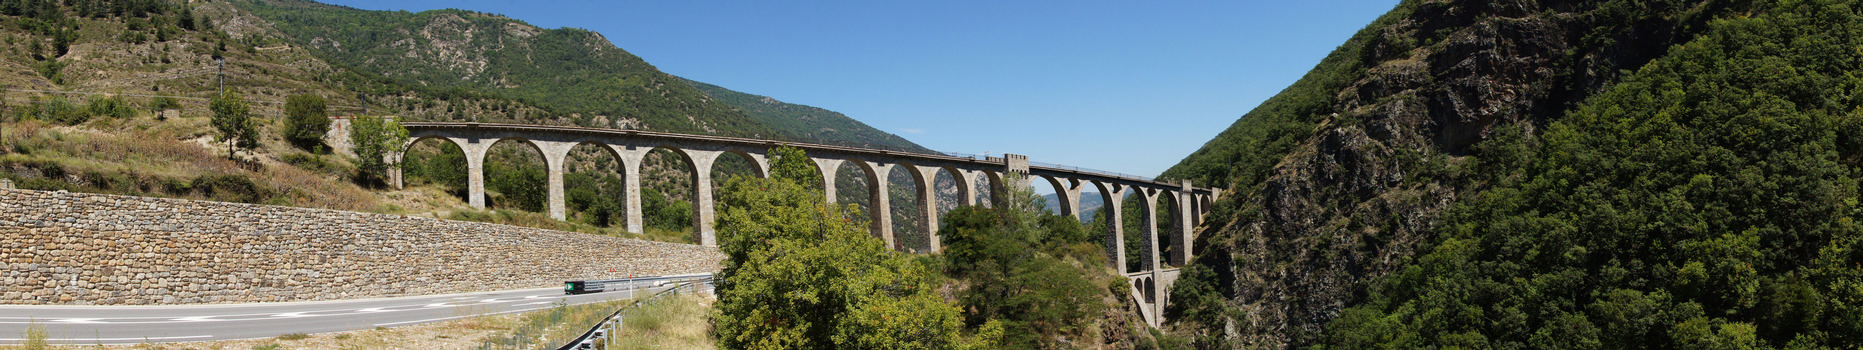 Fontpedrouse Bridge